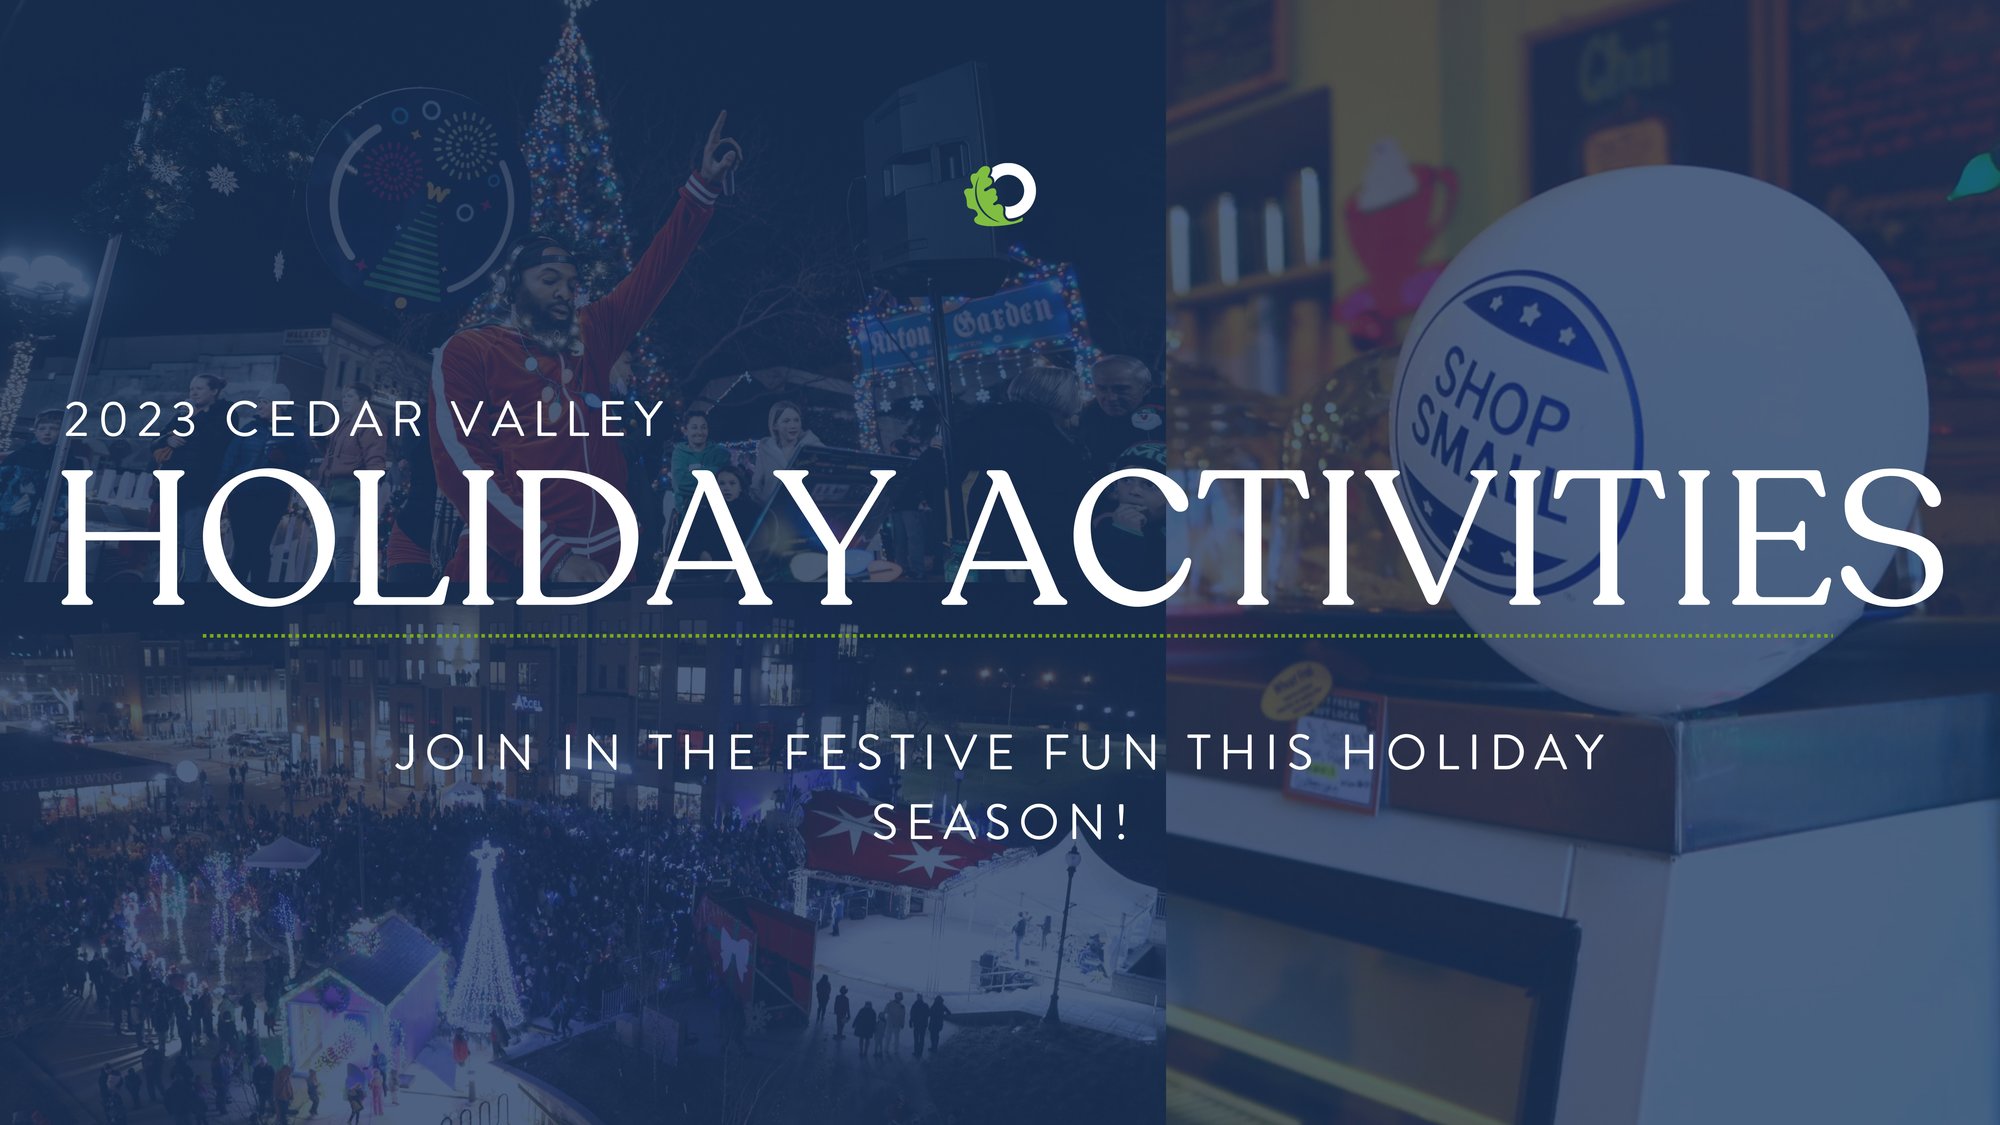 2023 holiday activities around the cedar valley